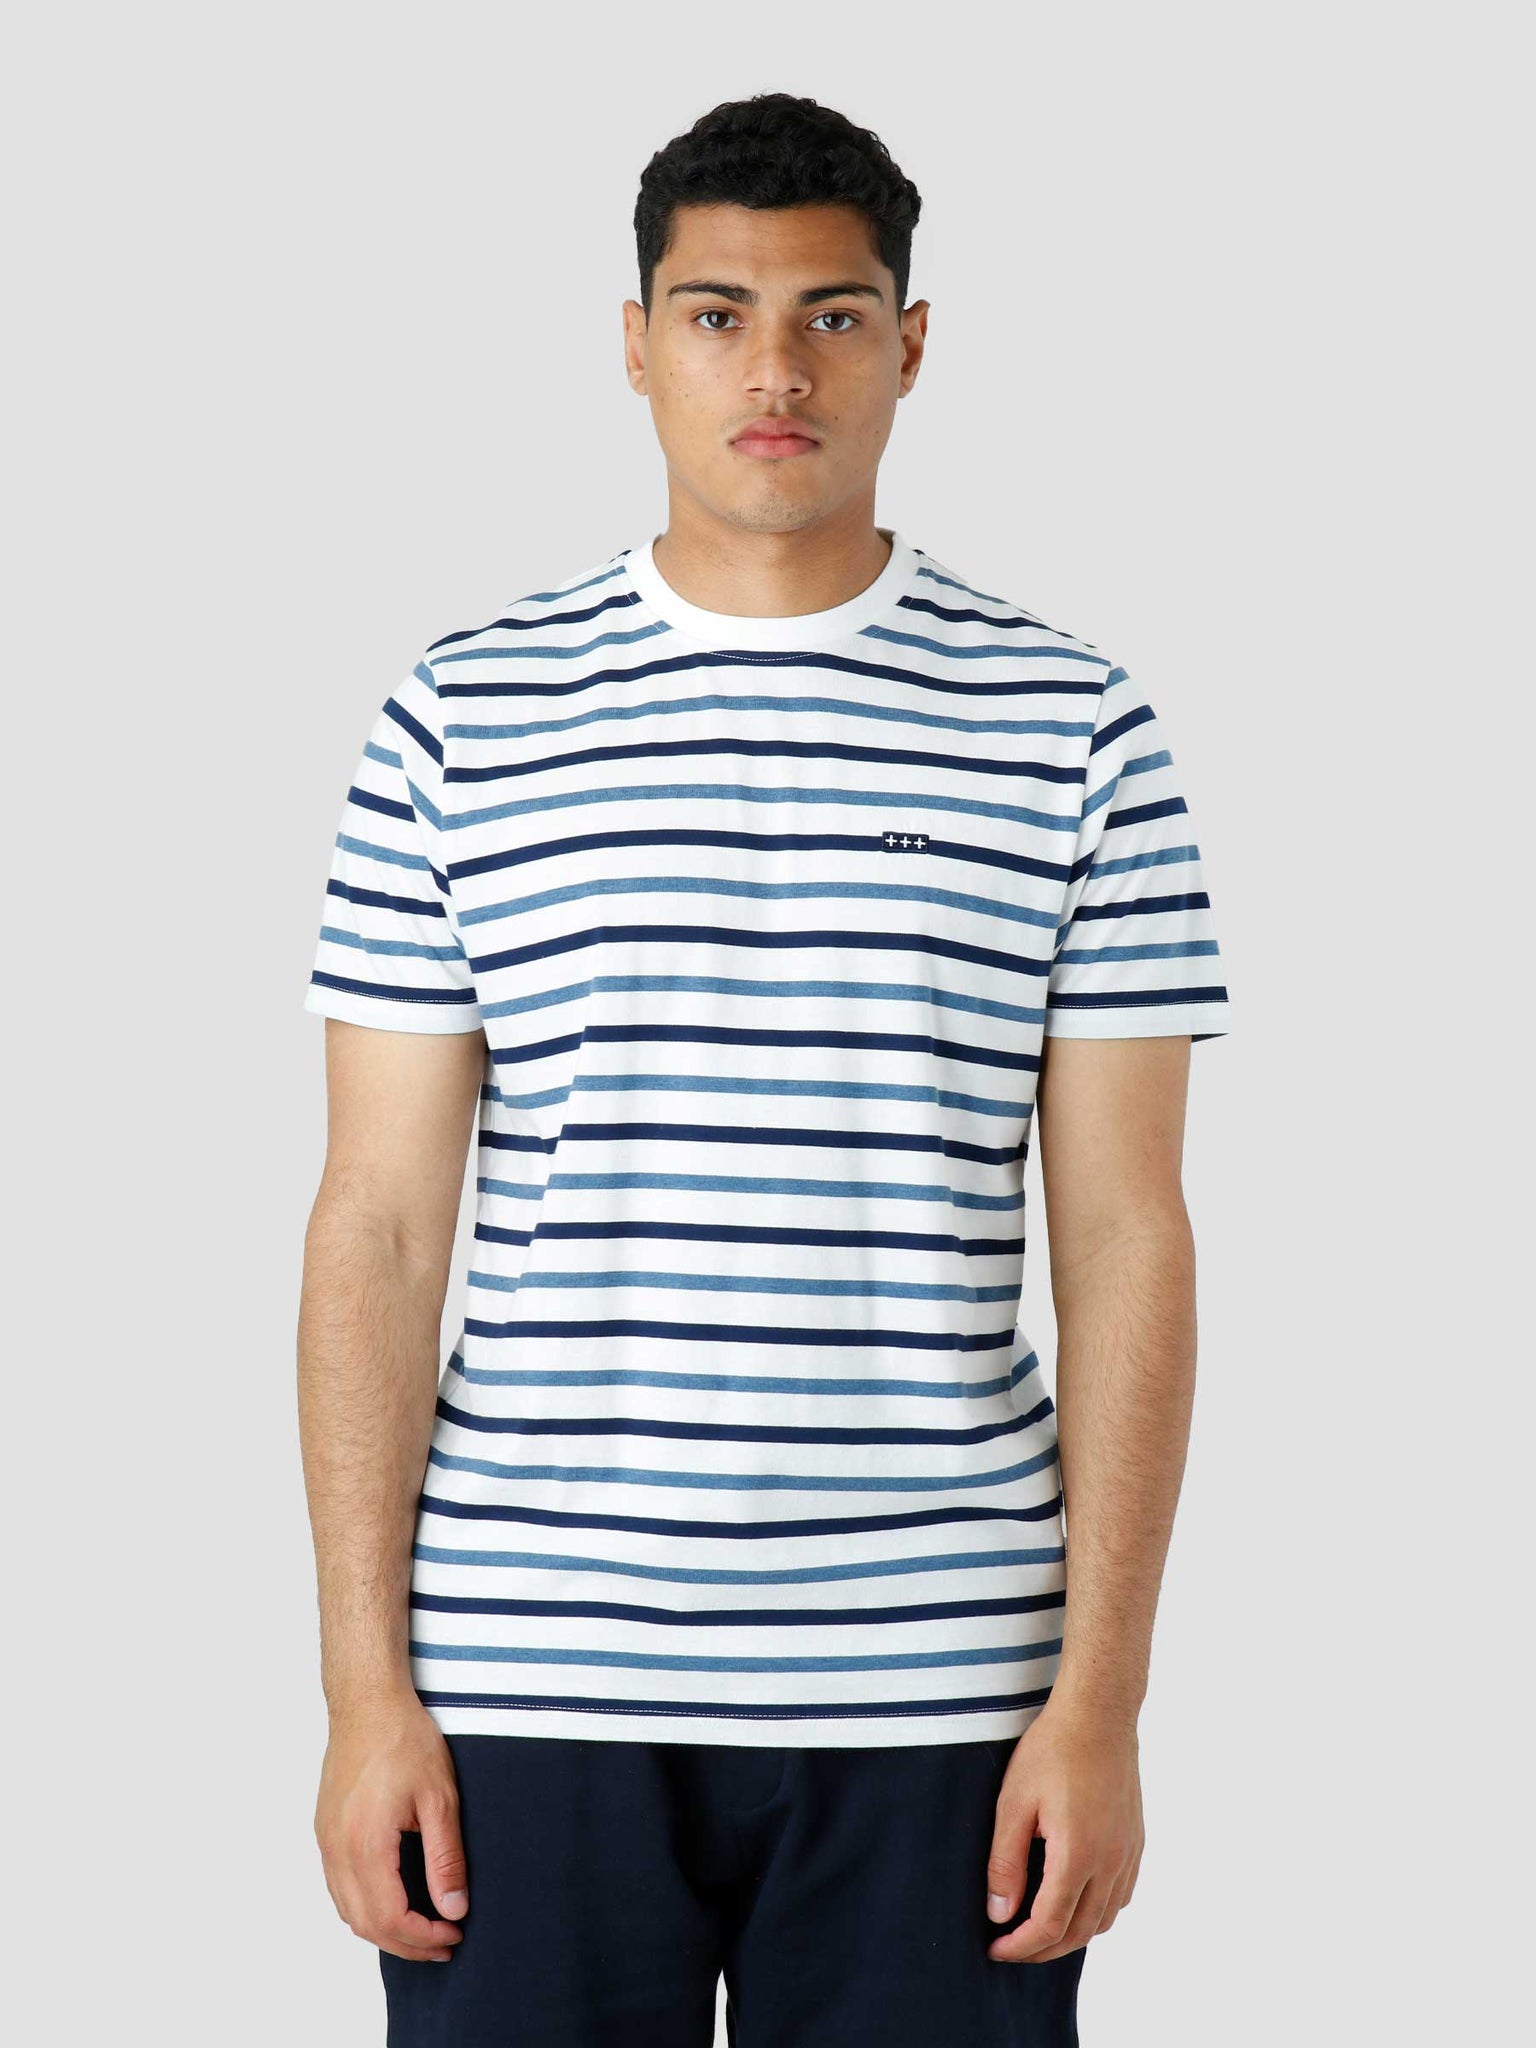 QB601 Stripe T-shirt White Navy Blue